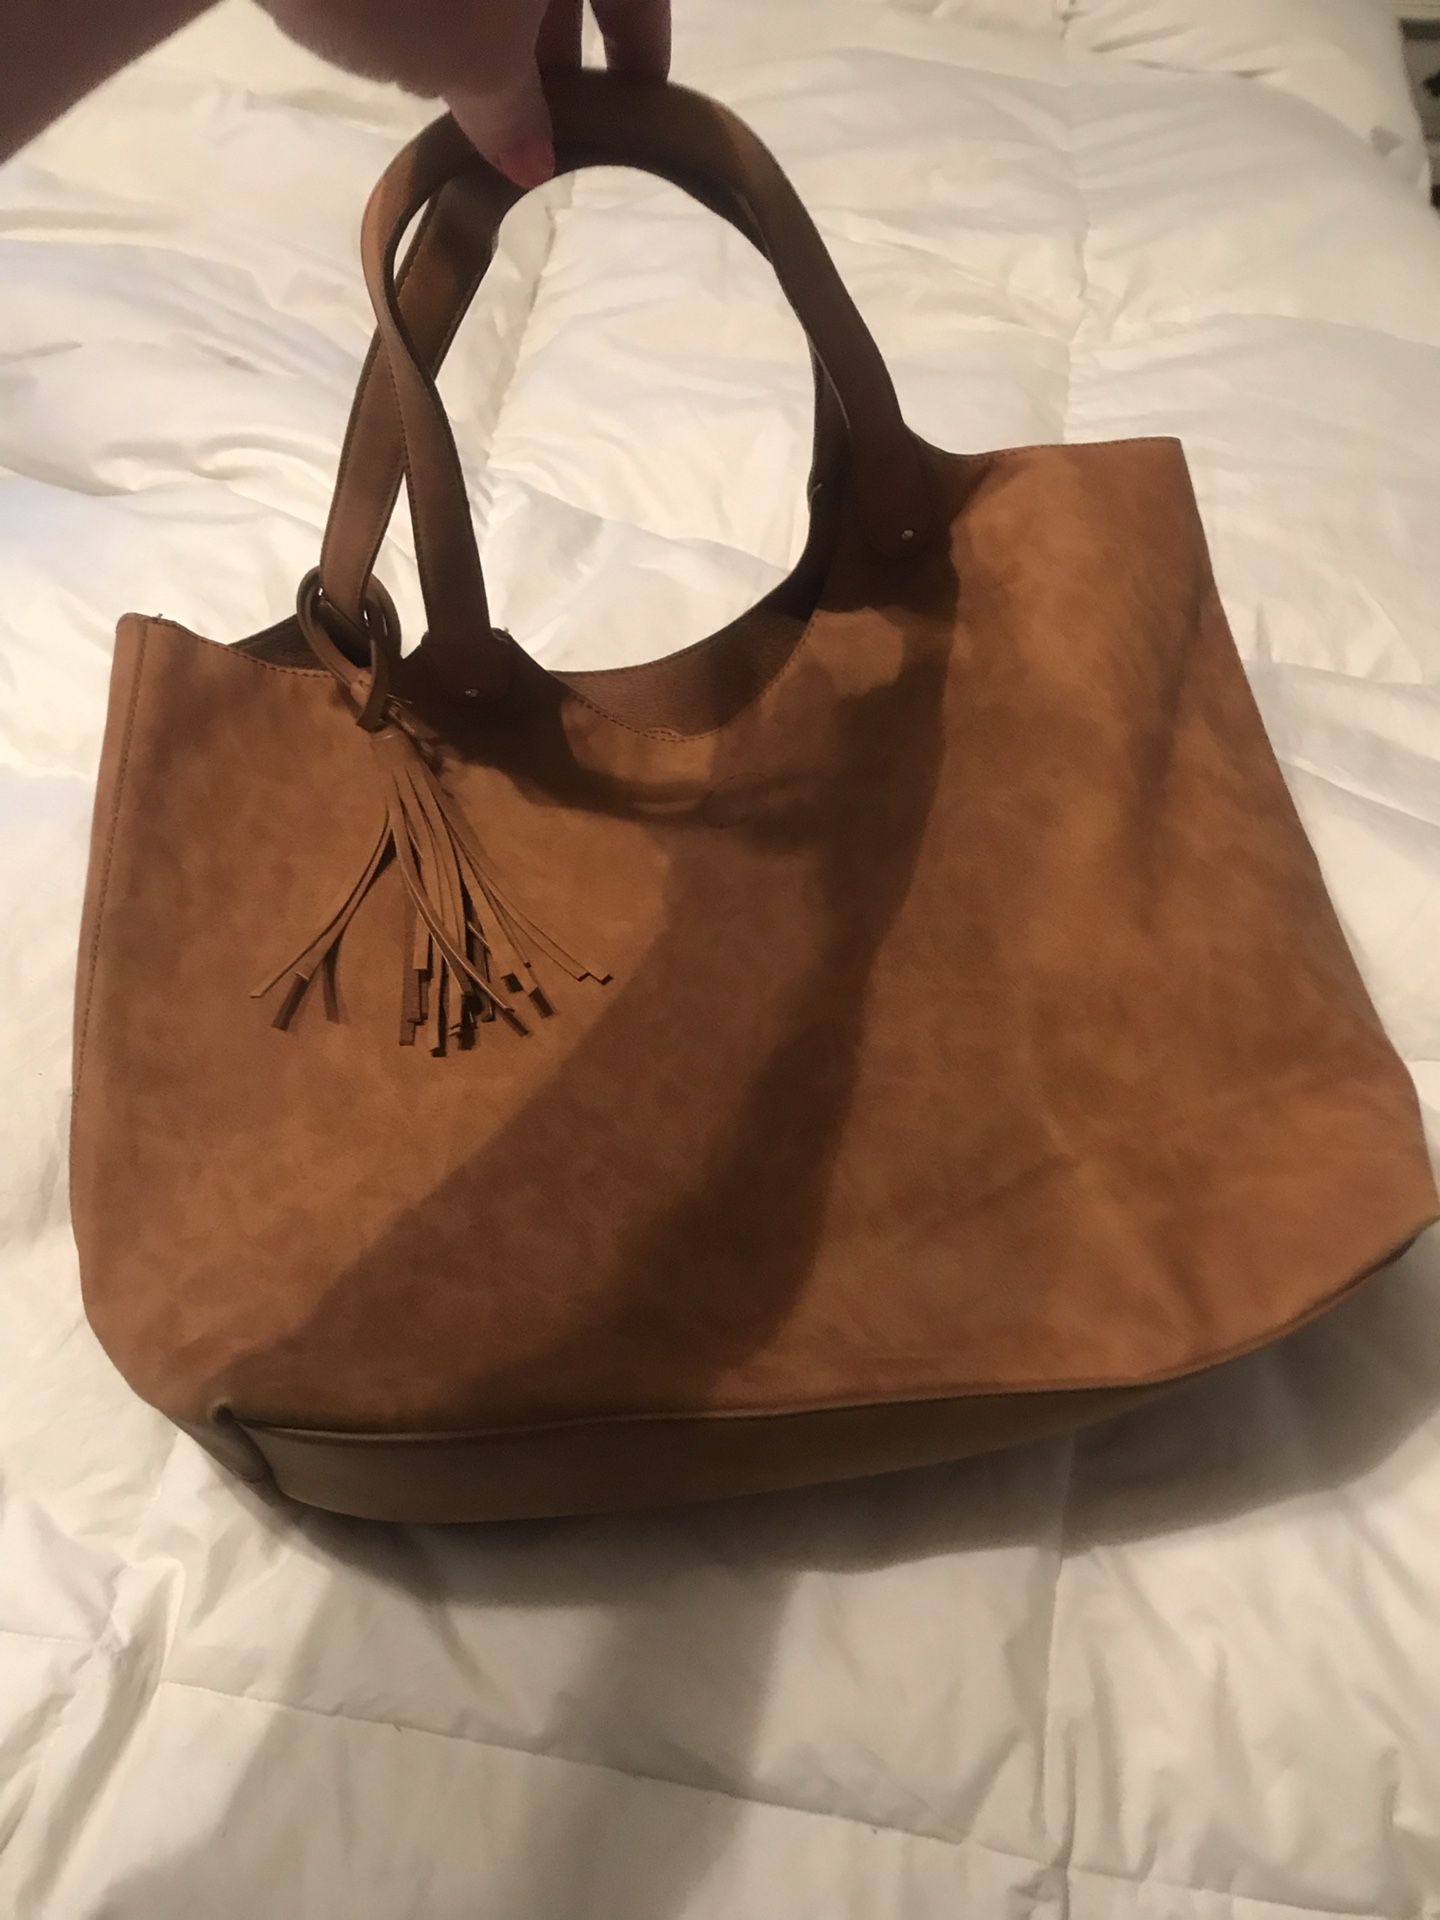 Big hobo style purse/bag